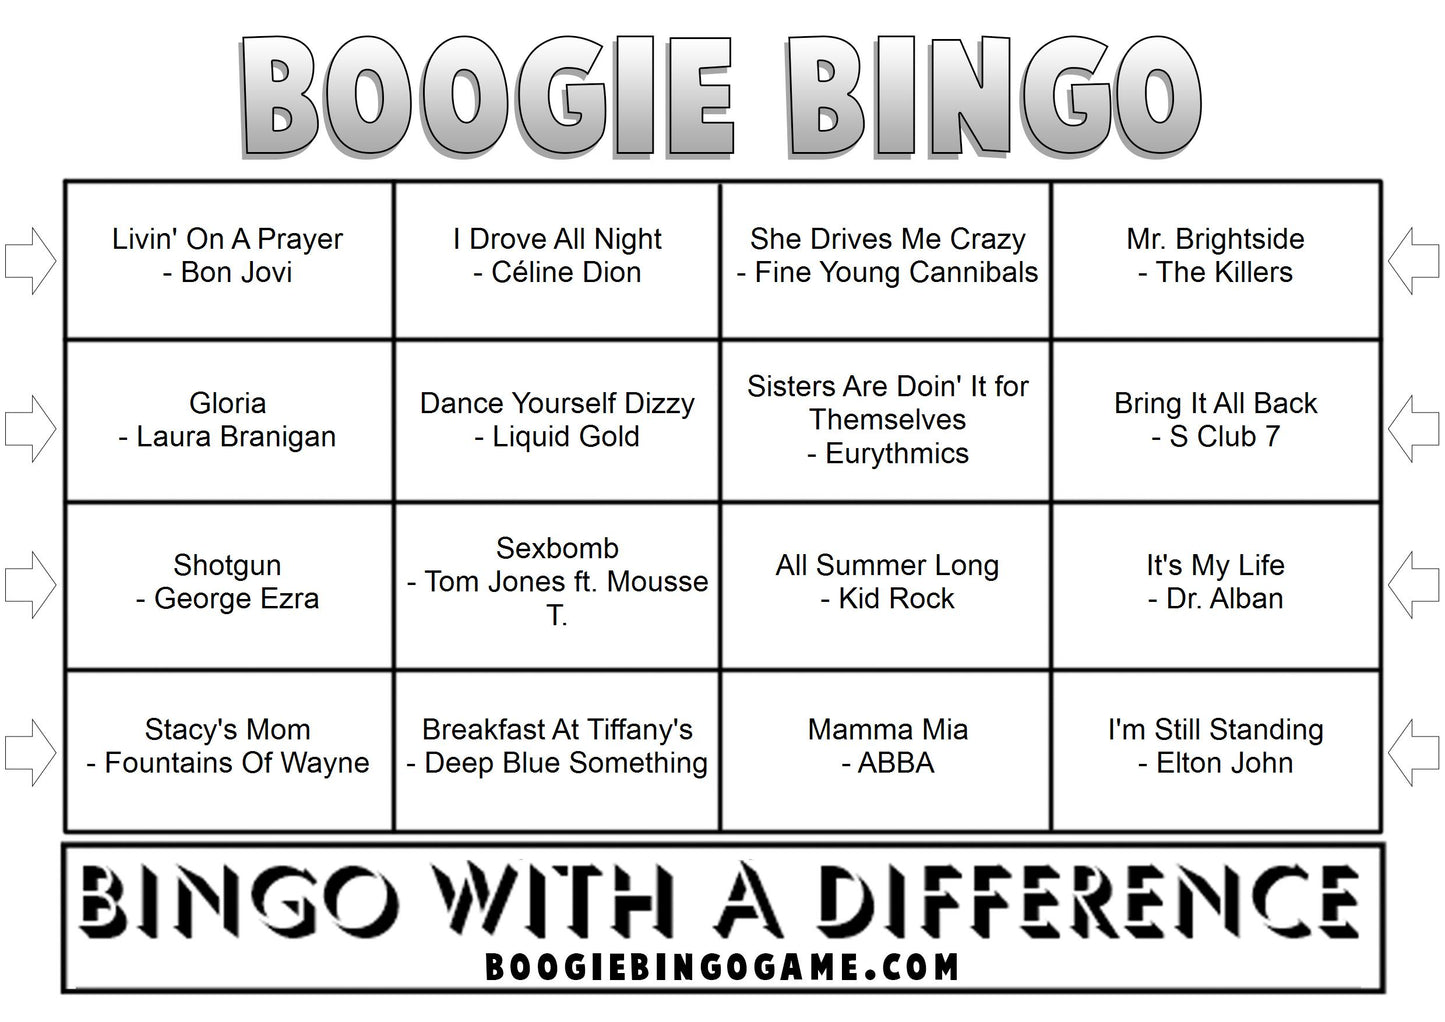 Game 101 | Non Stop Bangers | Boogie Bingo | Printable Music Bingo Tickets